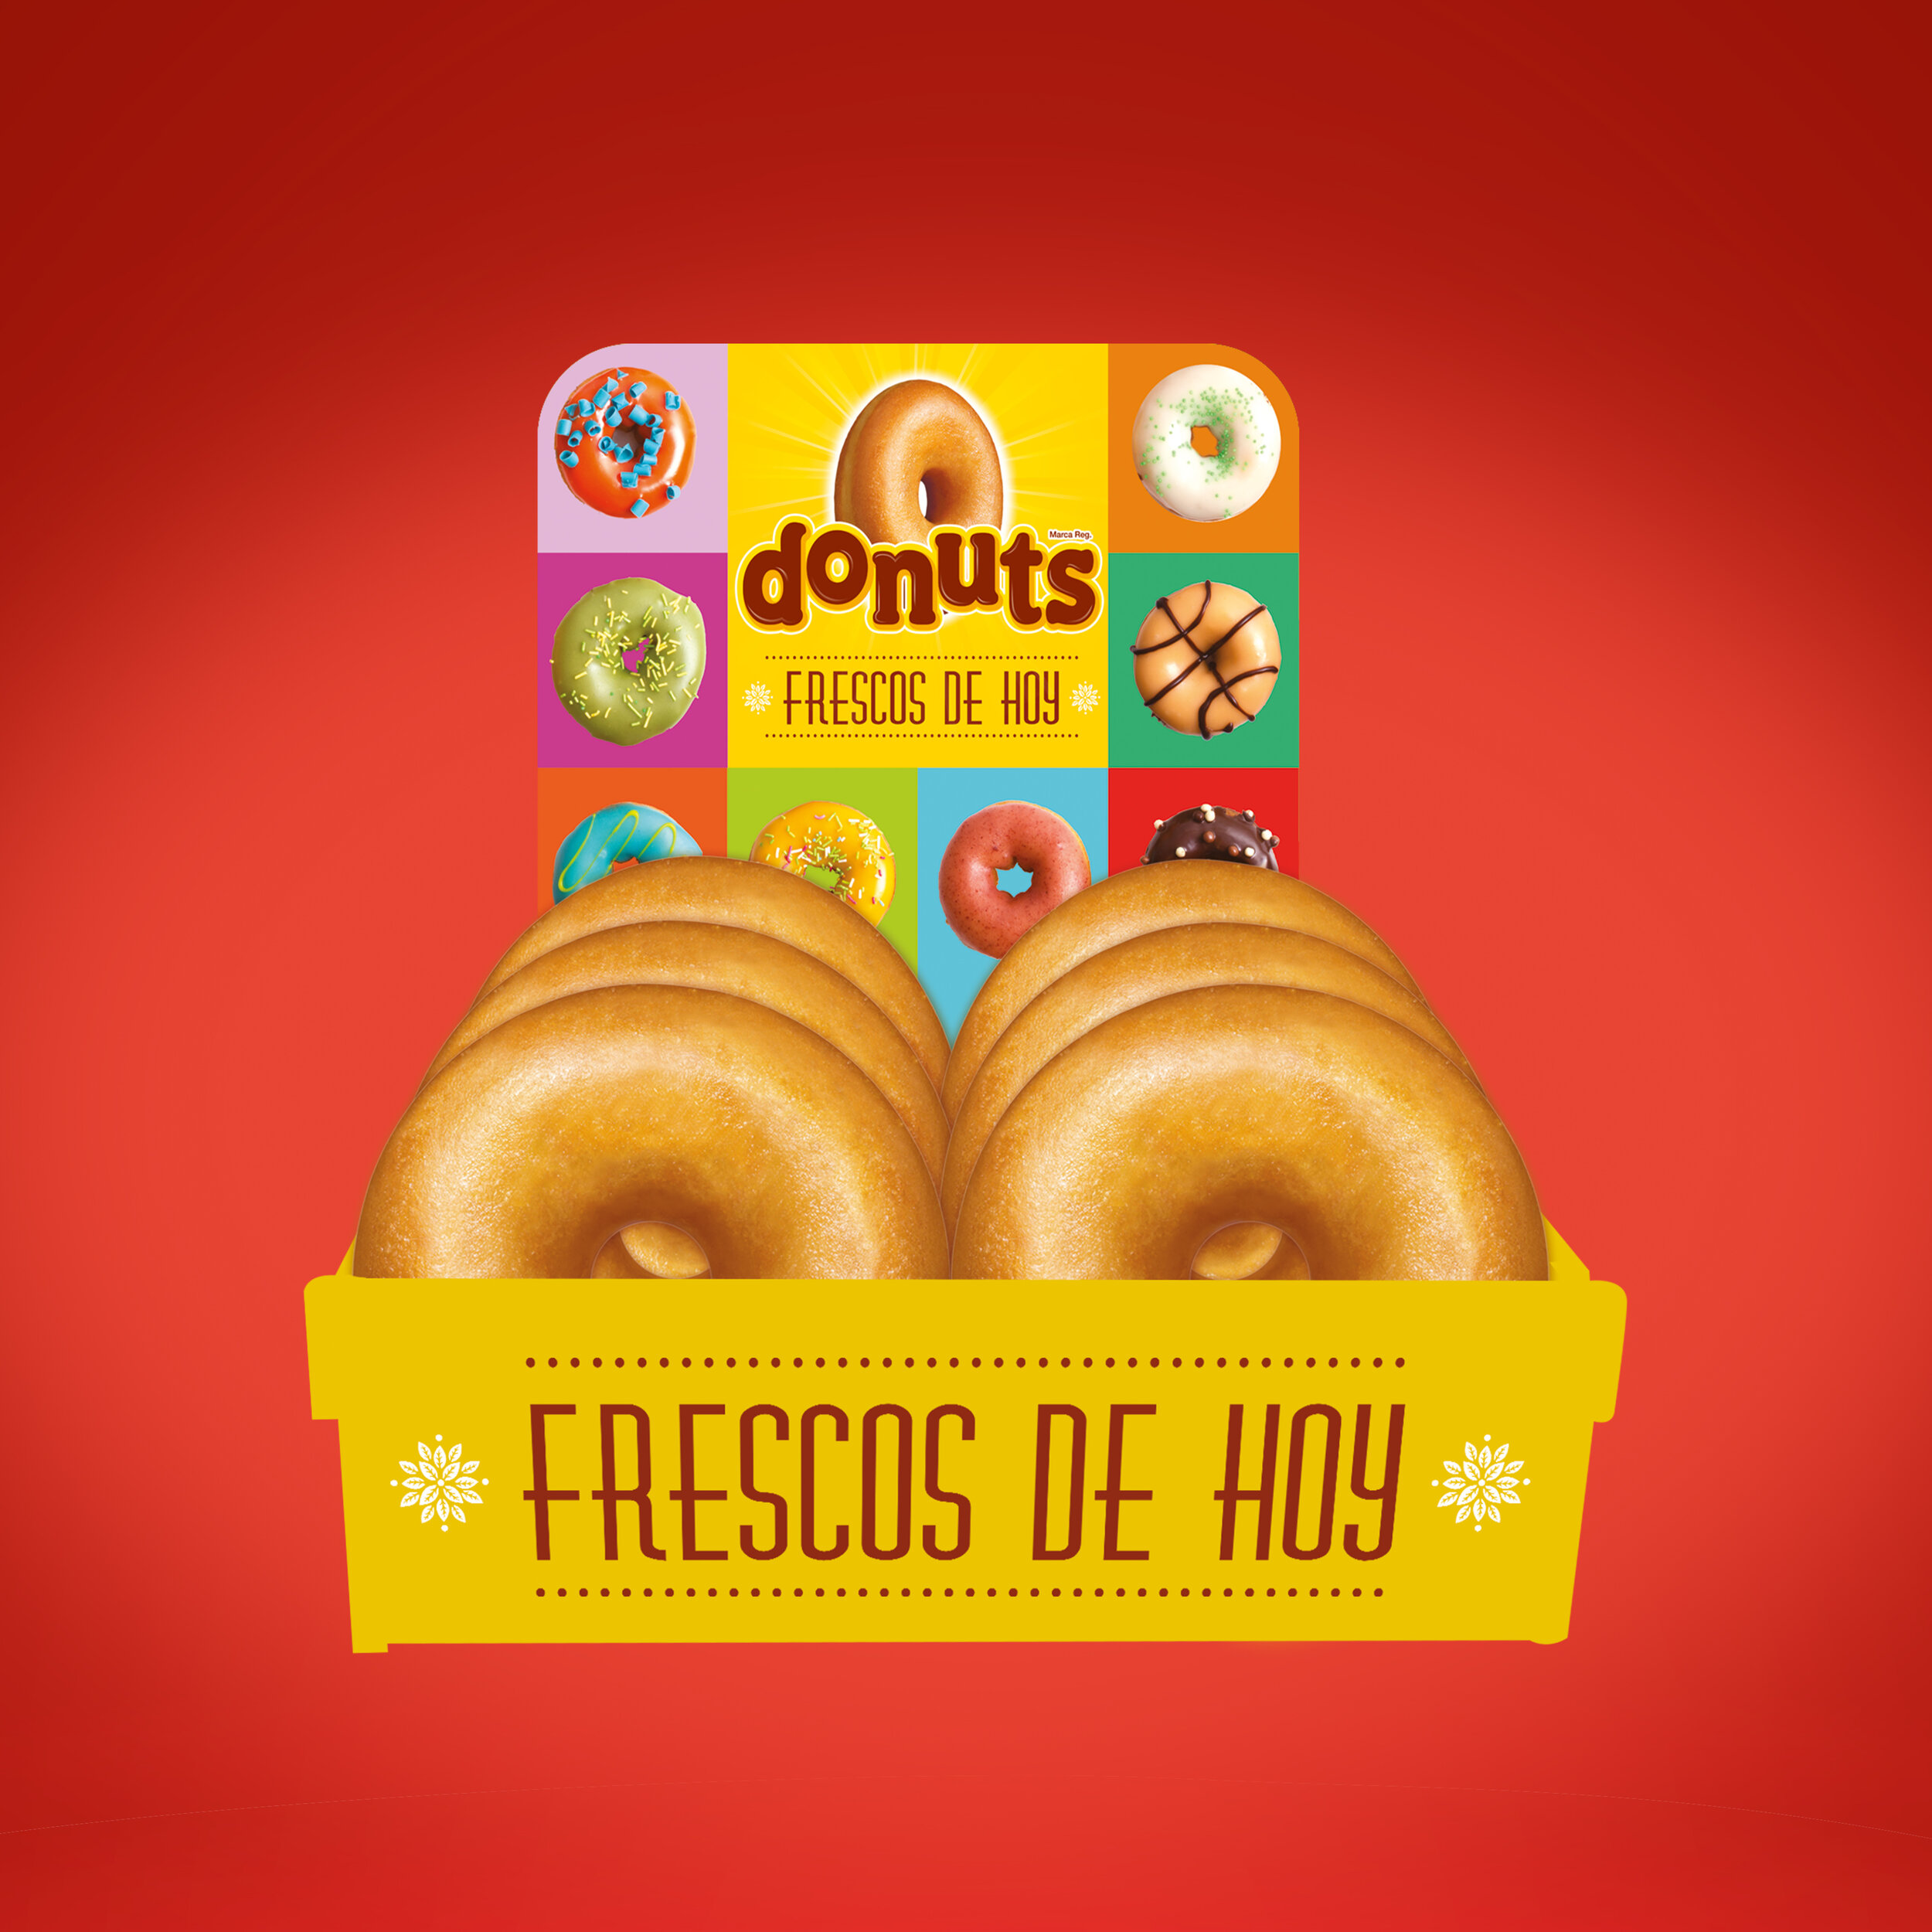 Donuts-Seleccion-del-dia_03.jpg